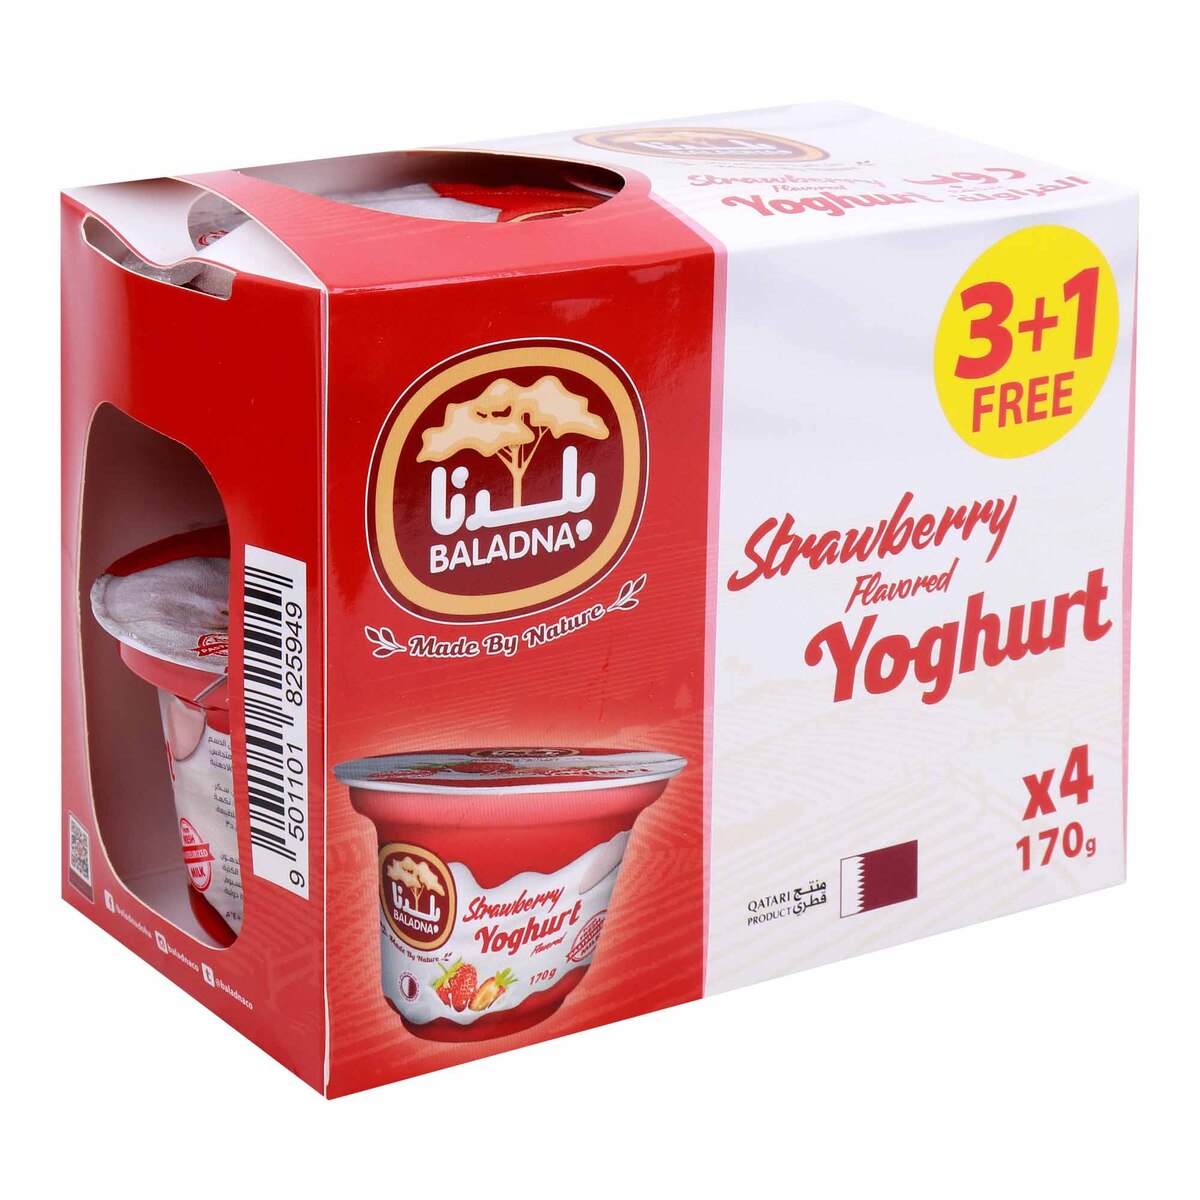 Baladna Strawberry Flavored Yoghurt Cups, 4 x 170 g